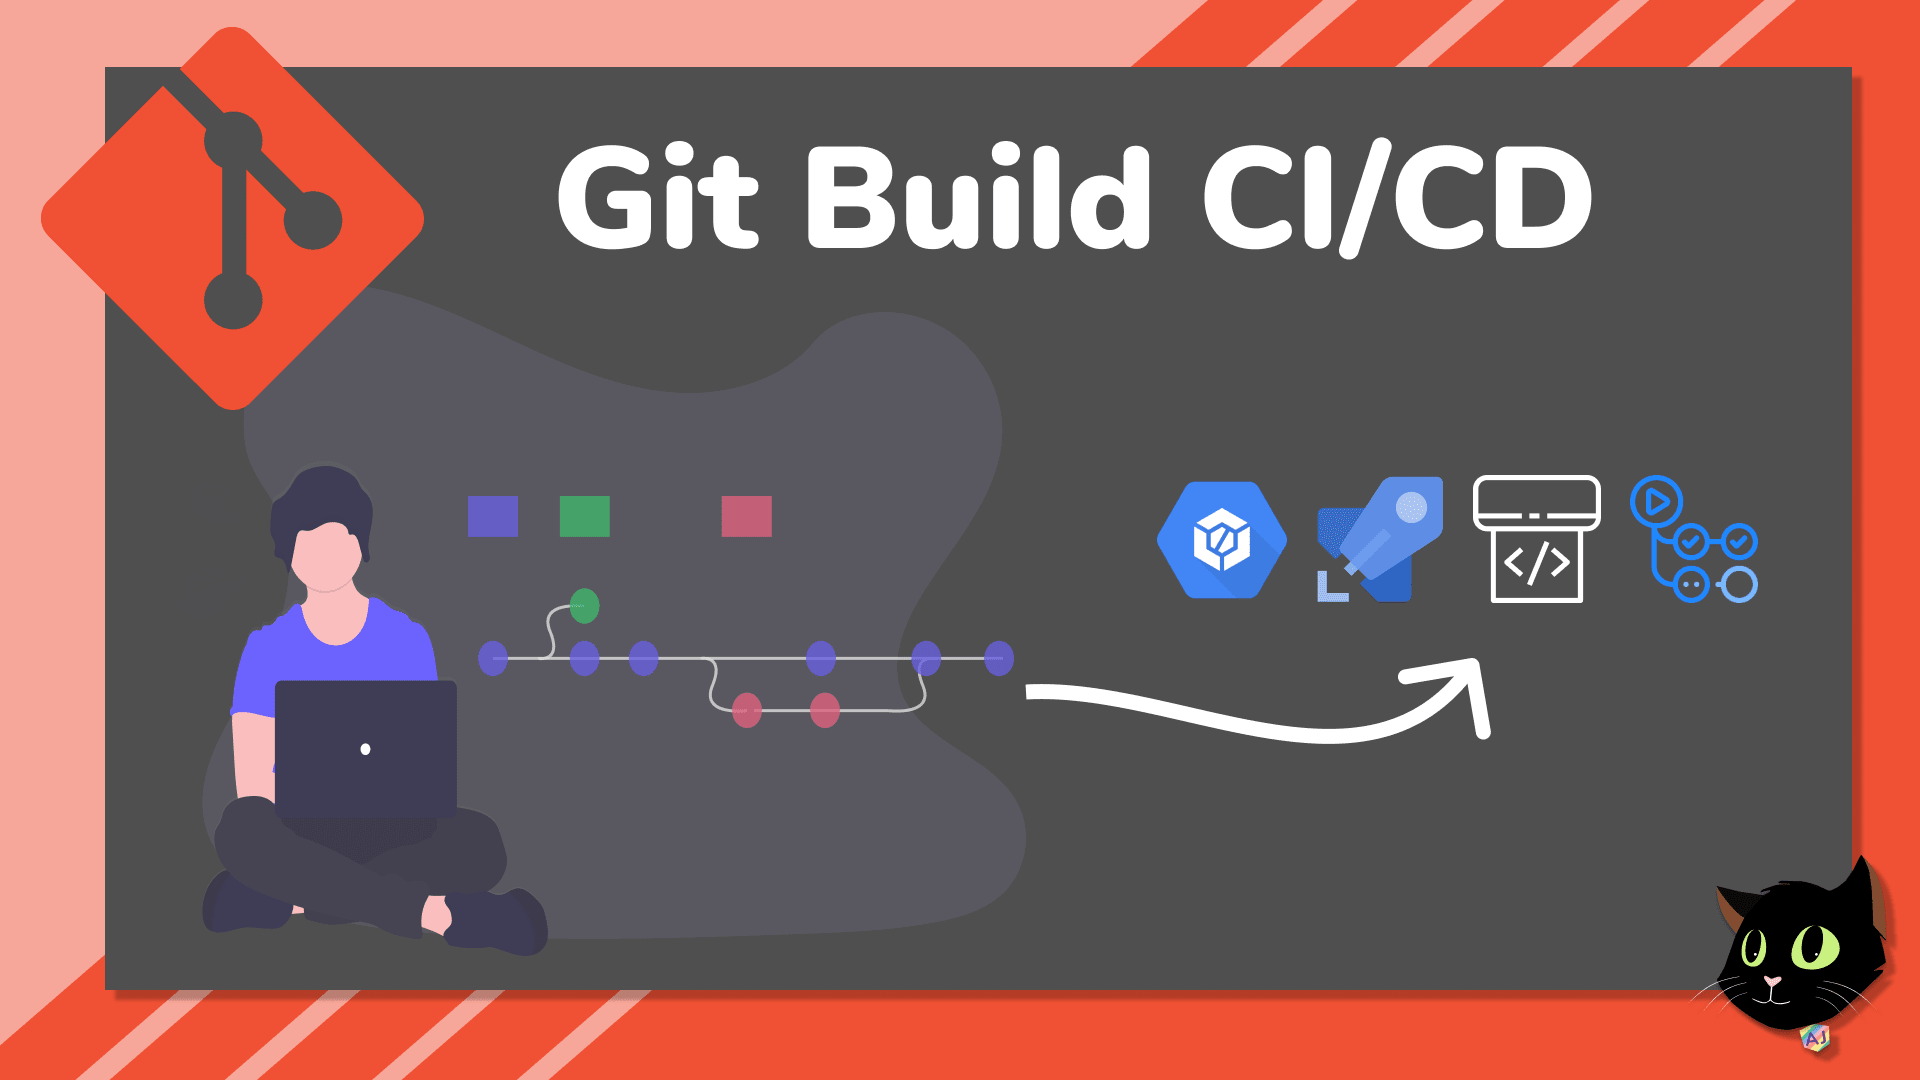 Git Build CI/CD